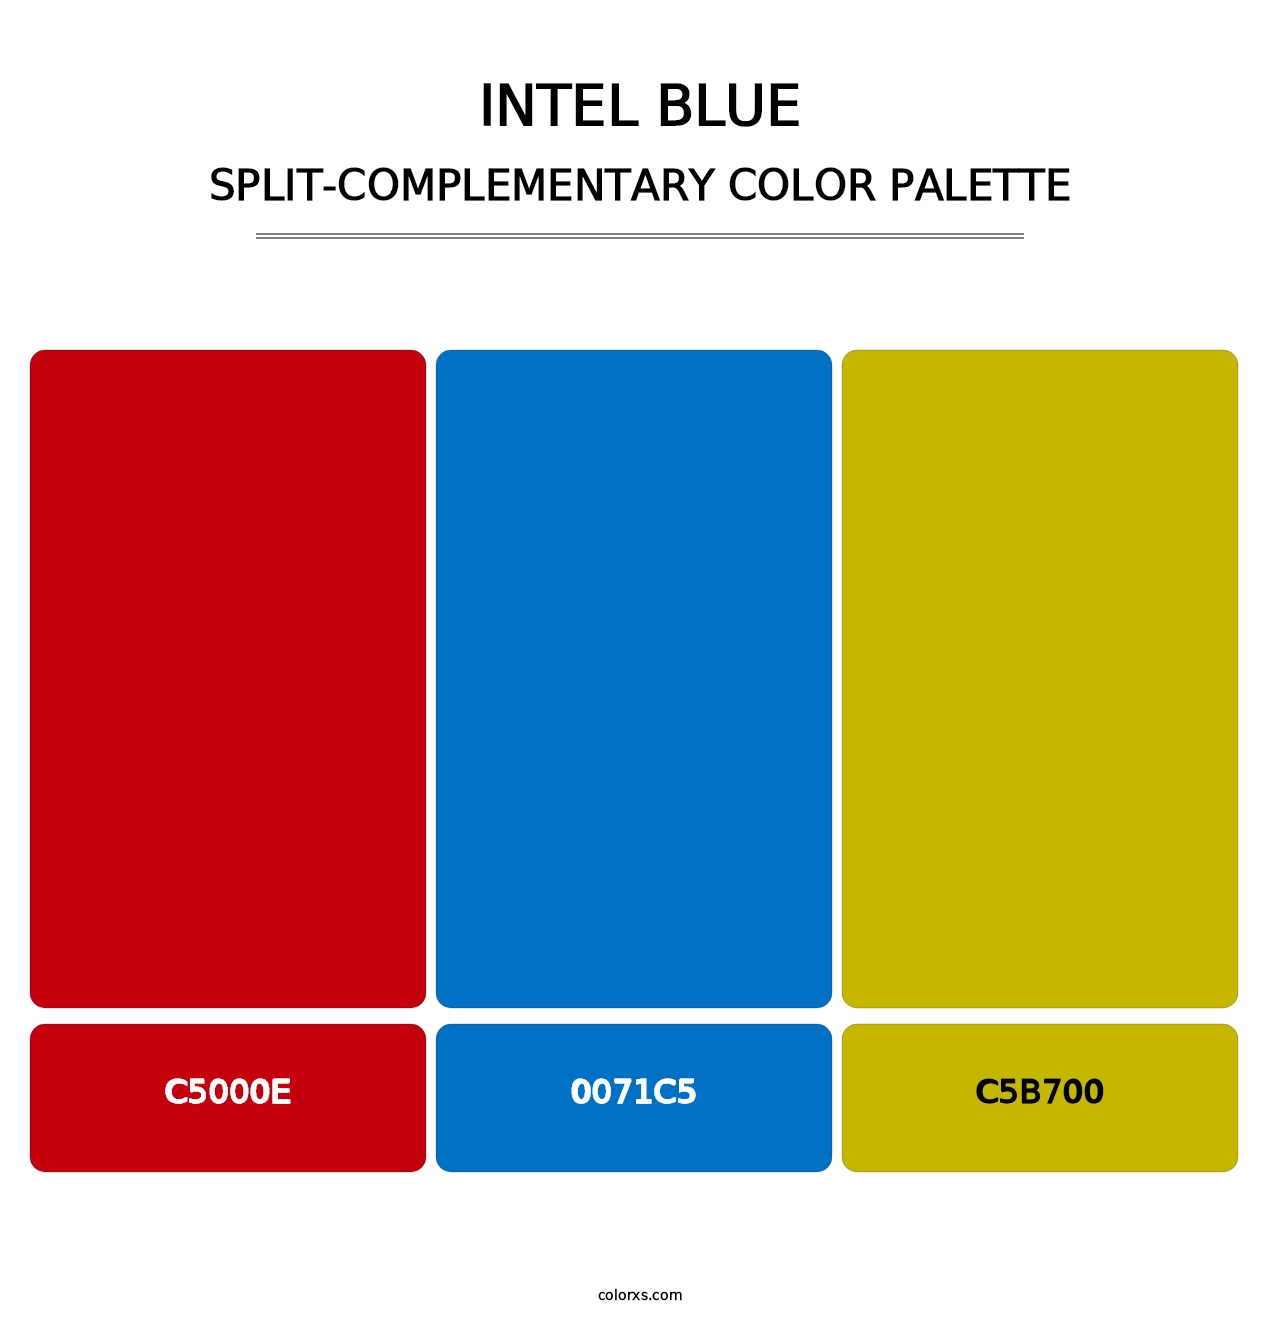 Intel Blue - Split-Complementary Color Palette